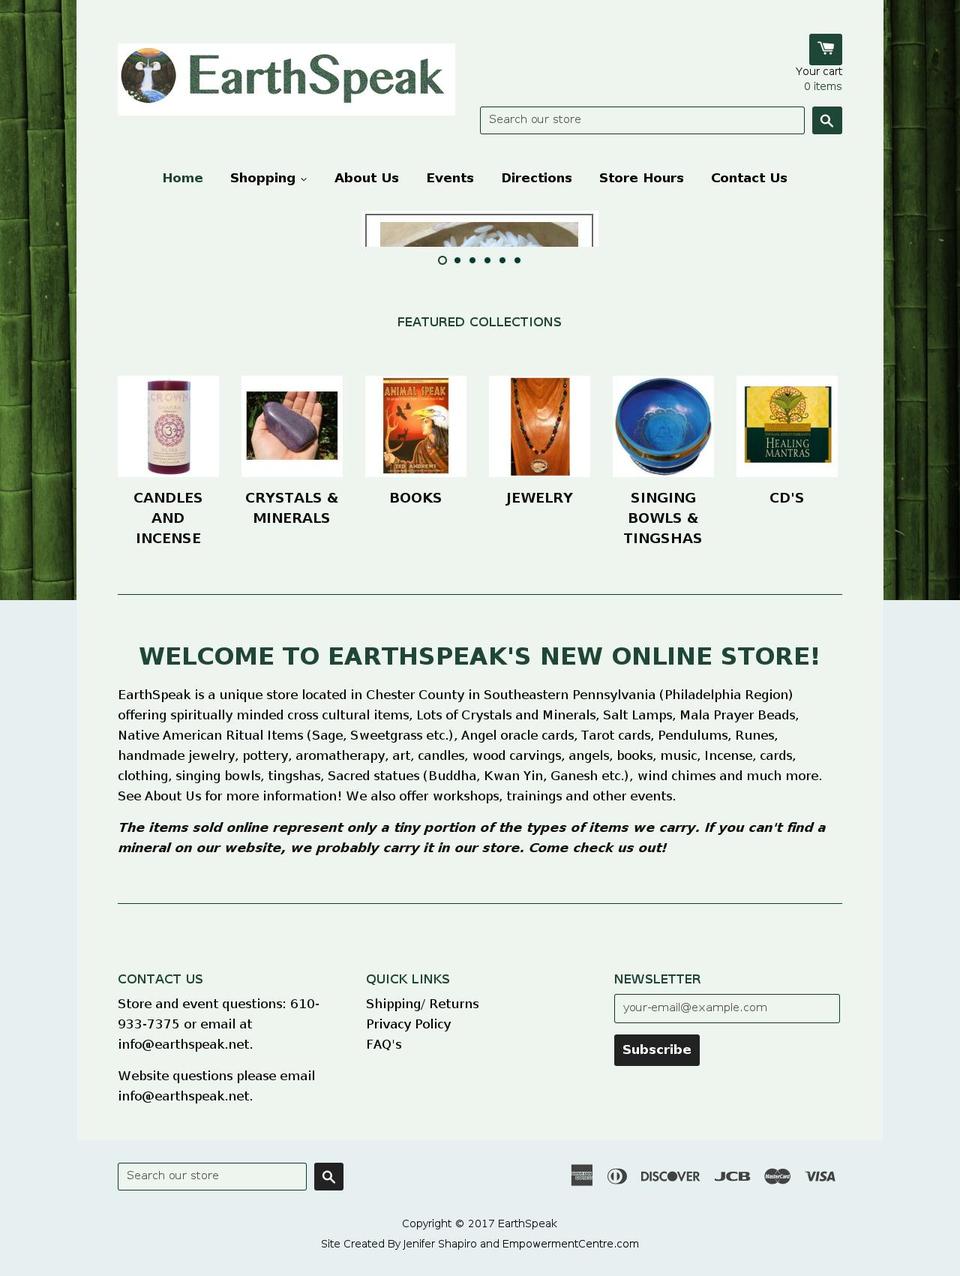 React Shopify theme site example earthspeak.net